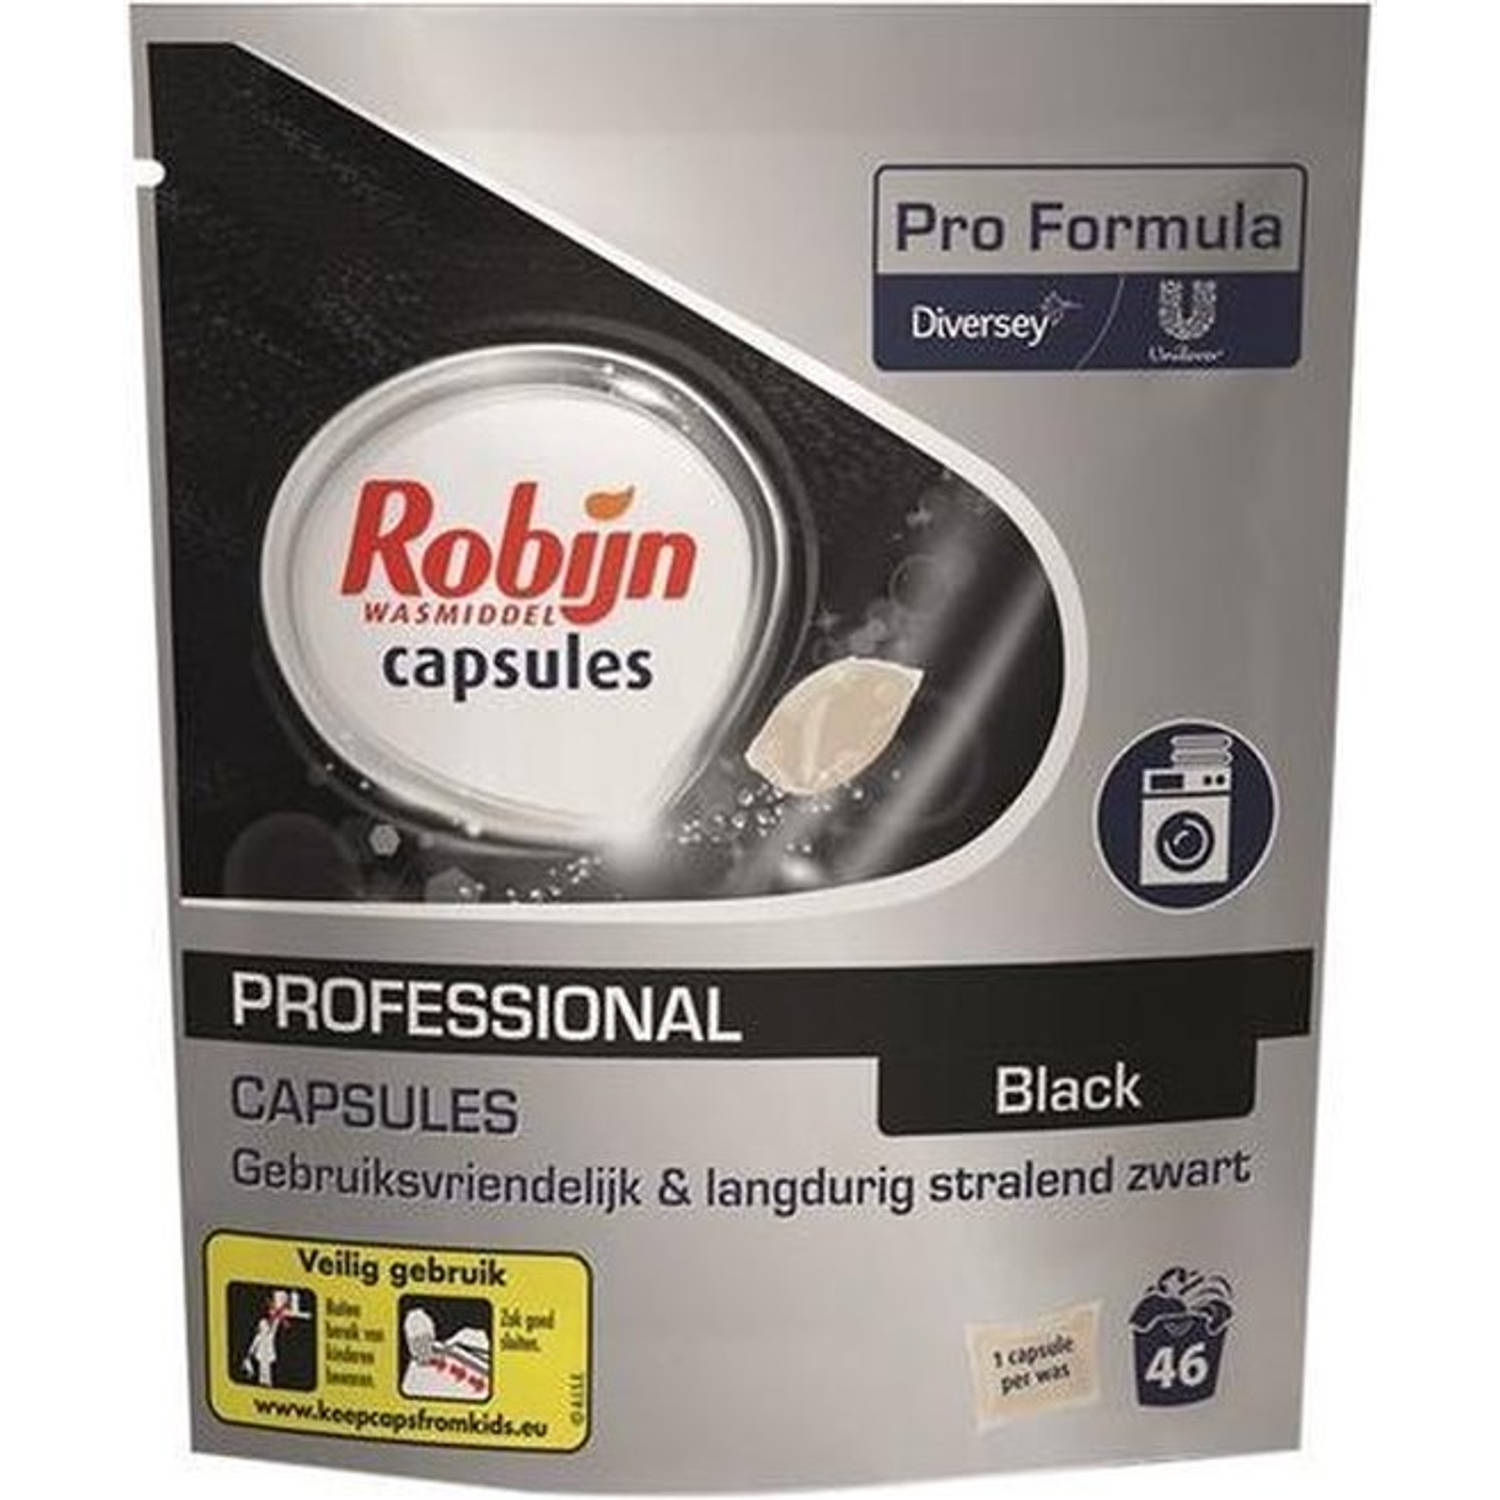 Robijn - Wasmiddel Capsules - Proffesional - Black Was - 46 capsules